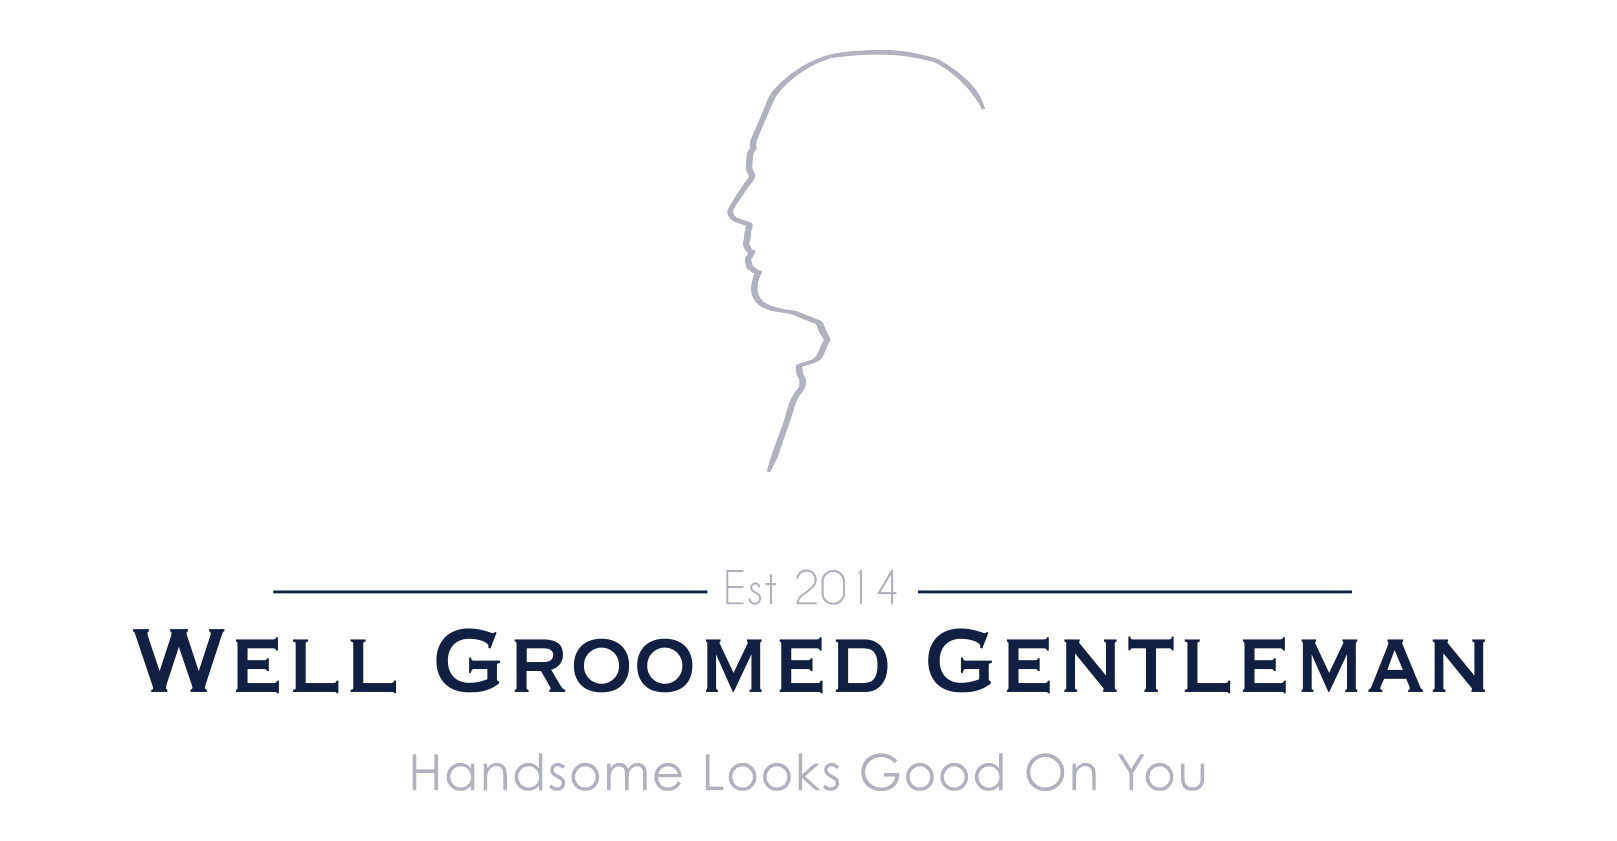 2014 Logo - well-groomed-gentleman-logo - WaterBiking Studio